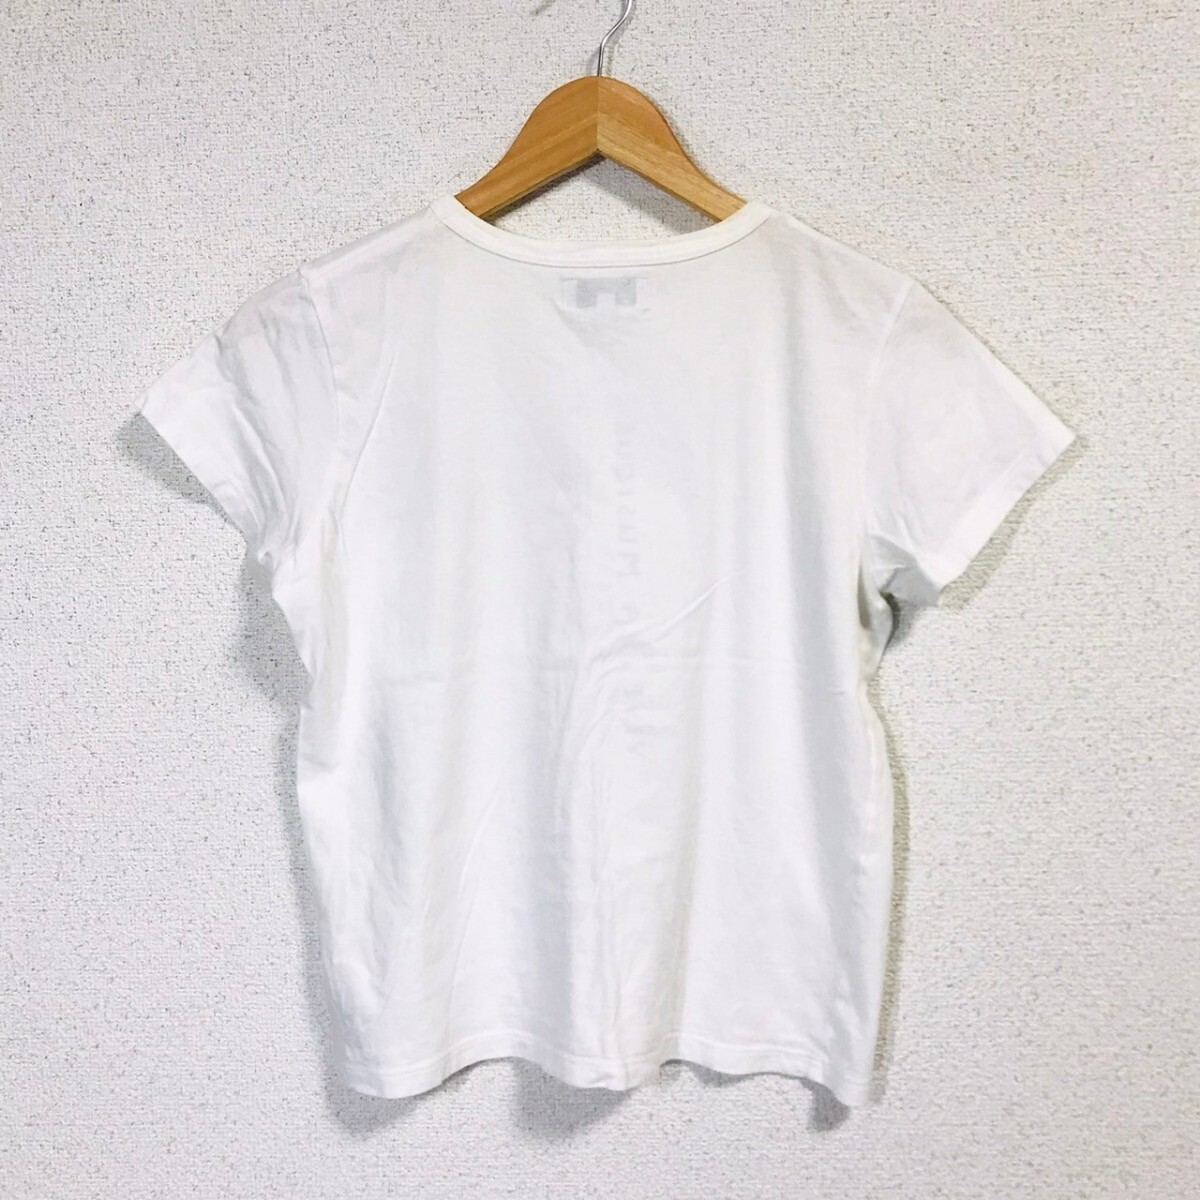 H8028dL 日本製 agnes b. アニエスベー サイズT2 (S～M位) 半袖Tシャツ カットソー プリントTシャツ ホワイト 白 レディース 綿100%_画像2